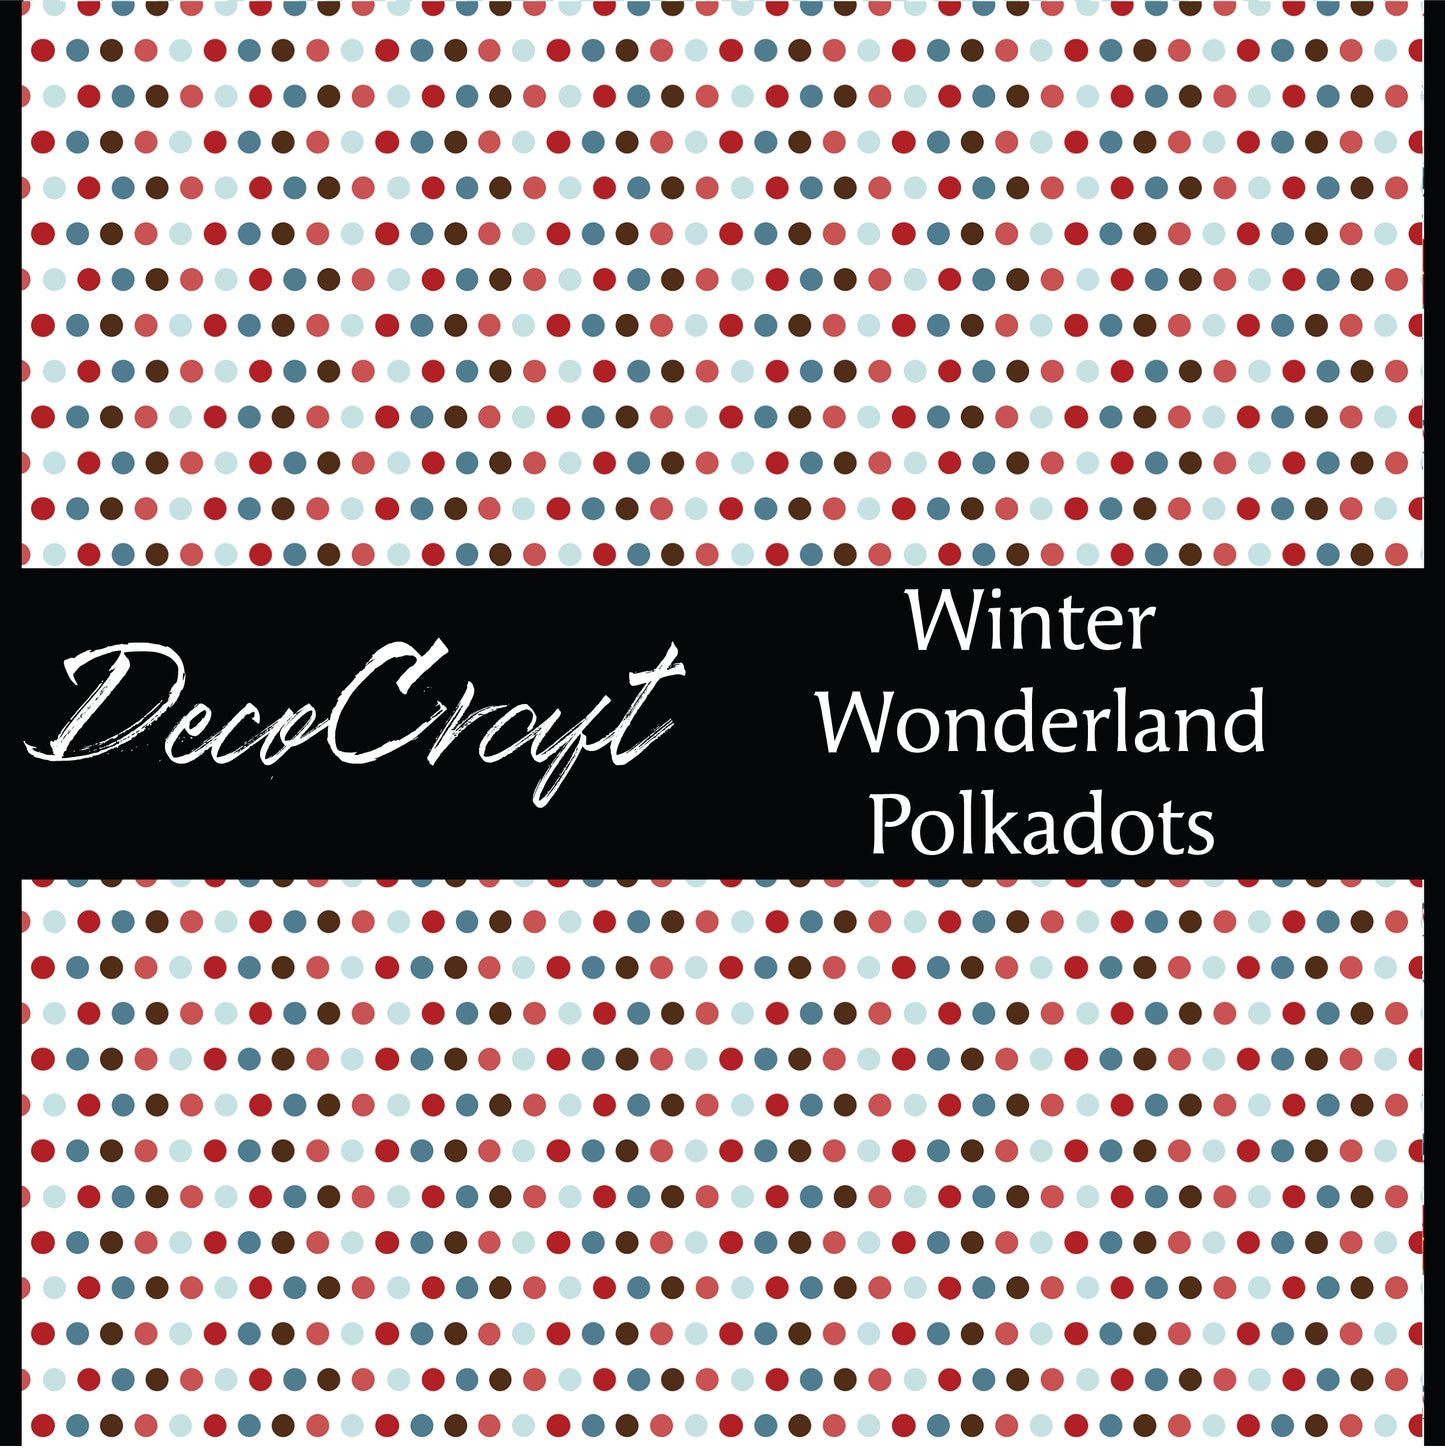 DecoCraft Christmas - Winter Wonderland - Polkadots